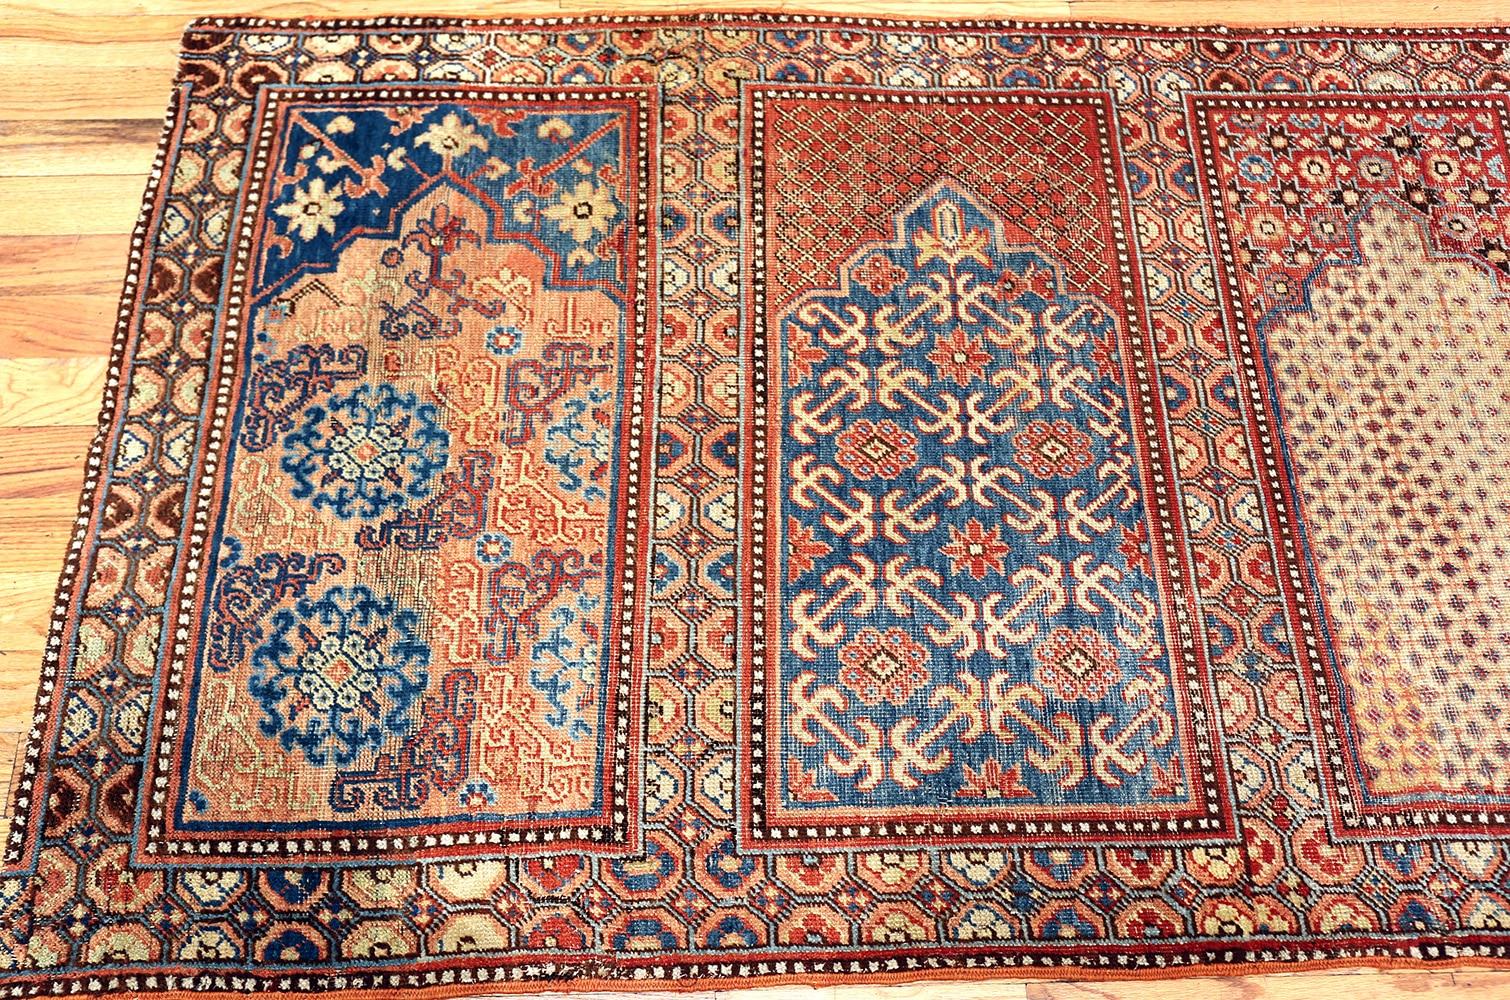 Wool 1800's Khotan Saf Prayer Rug from East Turkestan. Size: 8 ft 5 in x 3 ft 9 in 